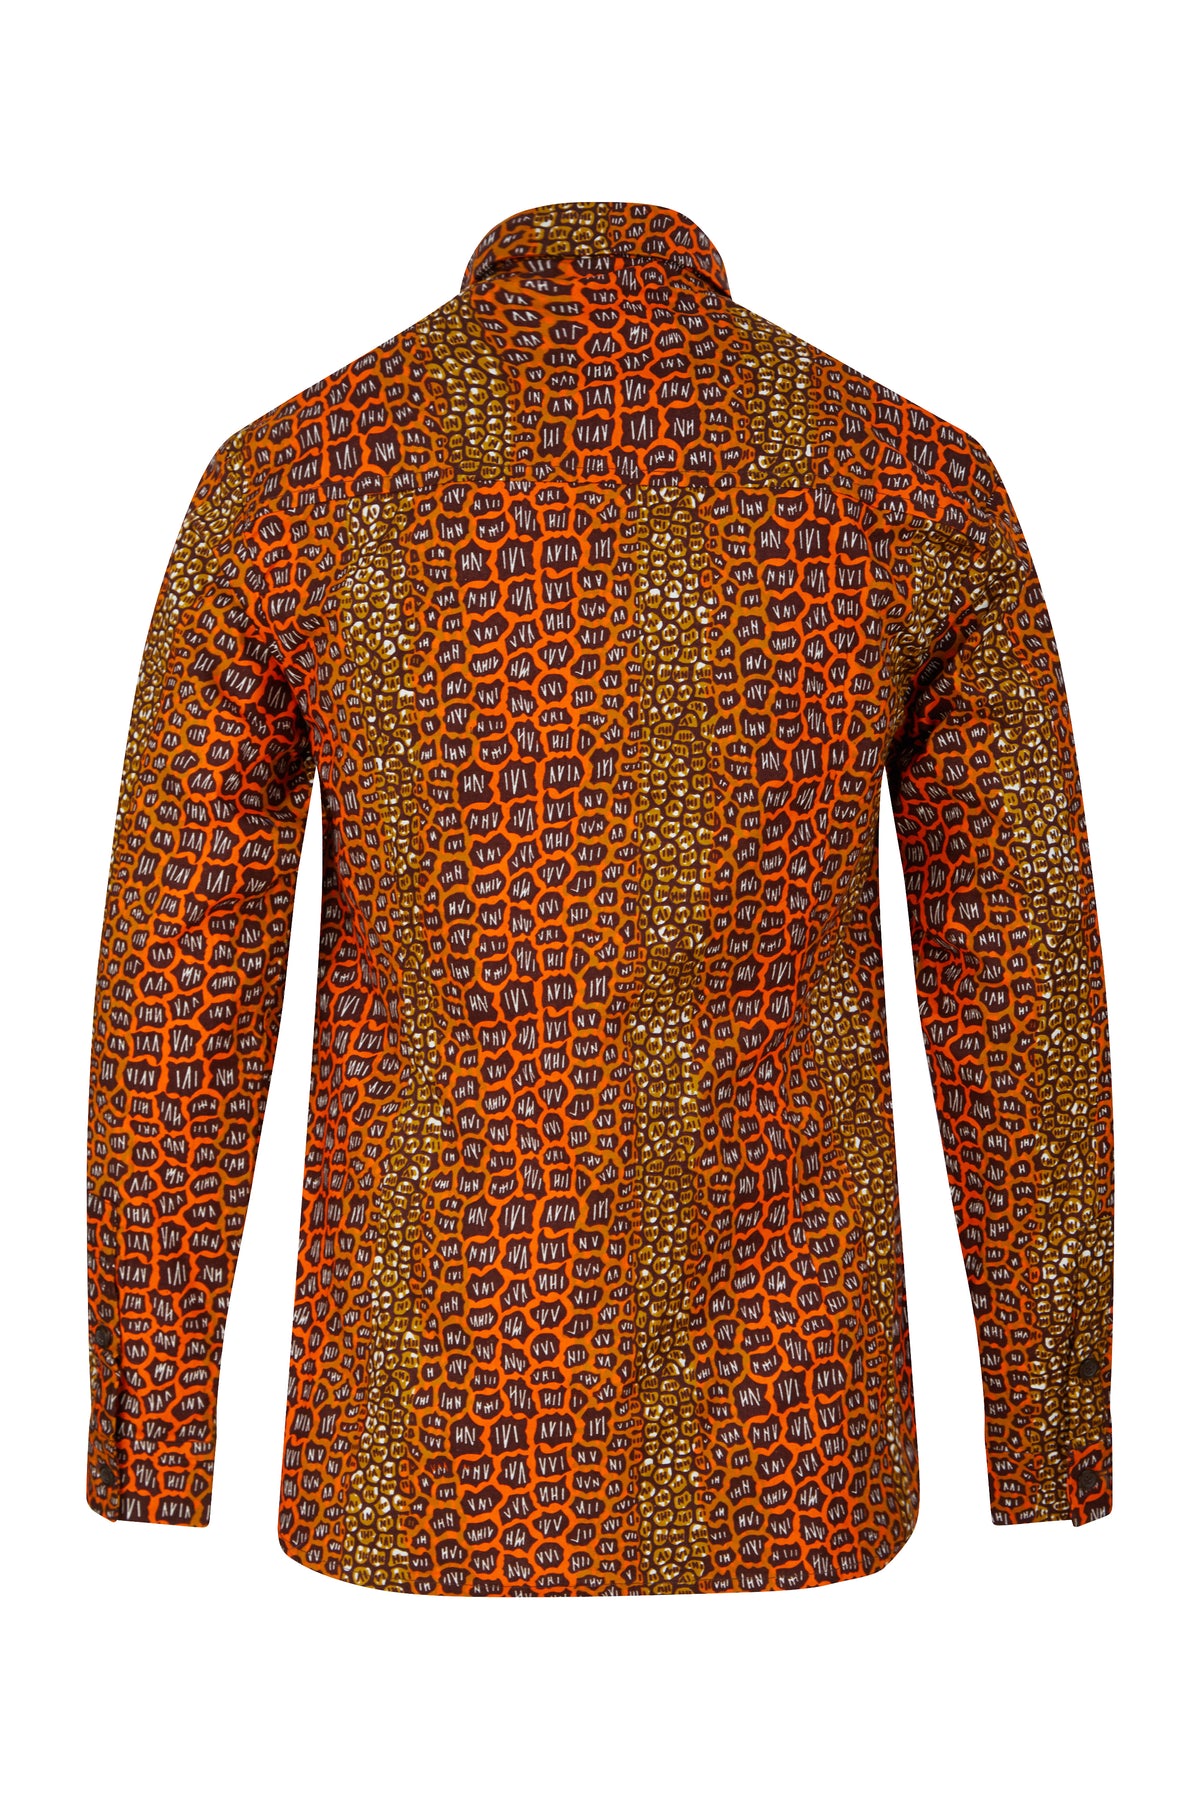 Asante Long sleeve African print shirt- Brownstone - OHEMA OHENE AFRICAN INSPIRED FASHION